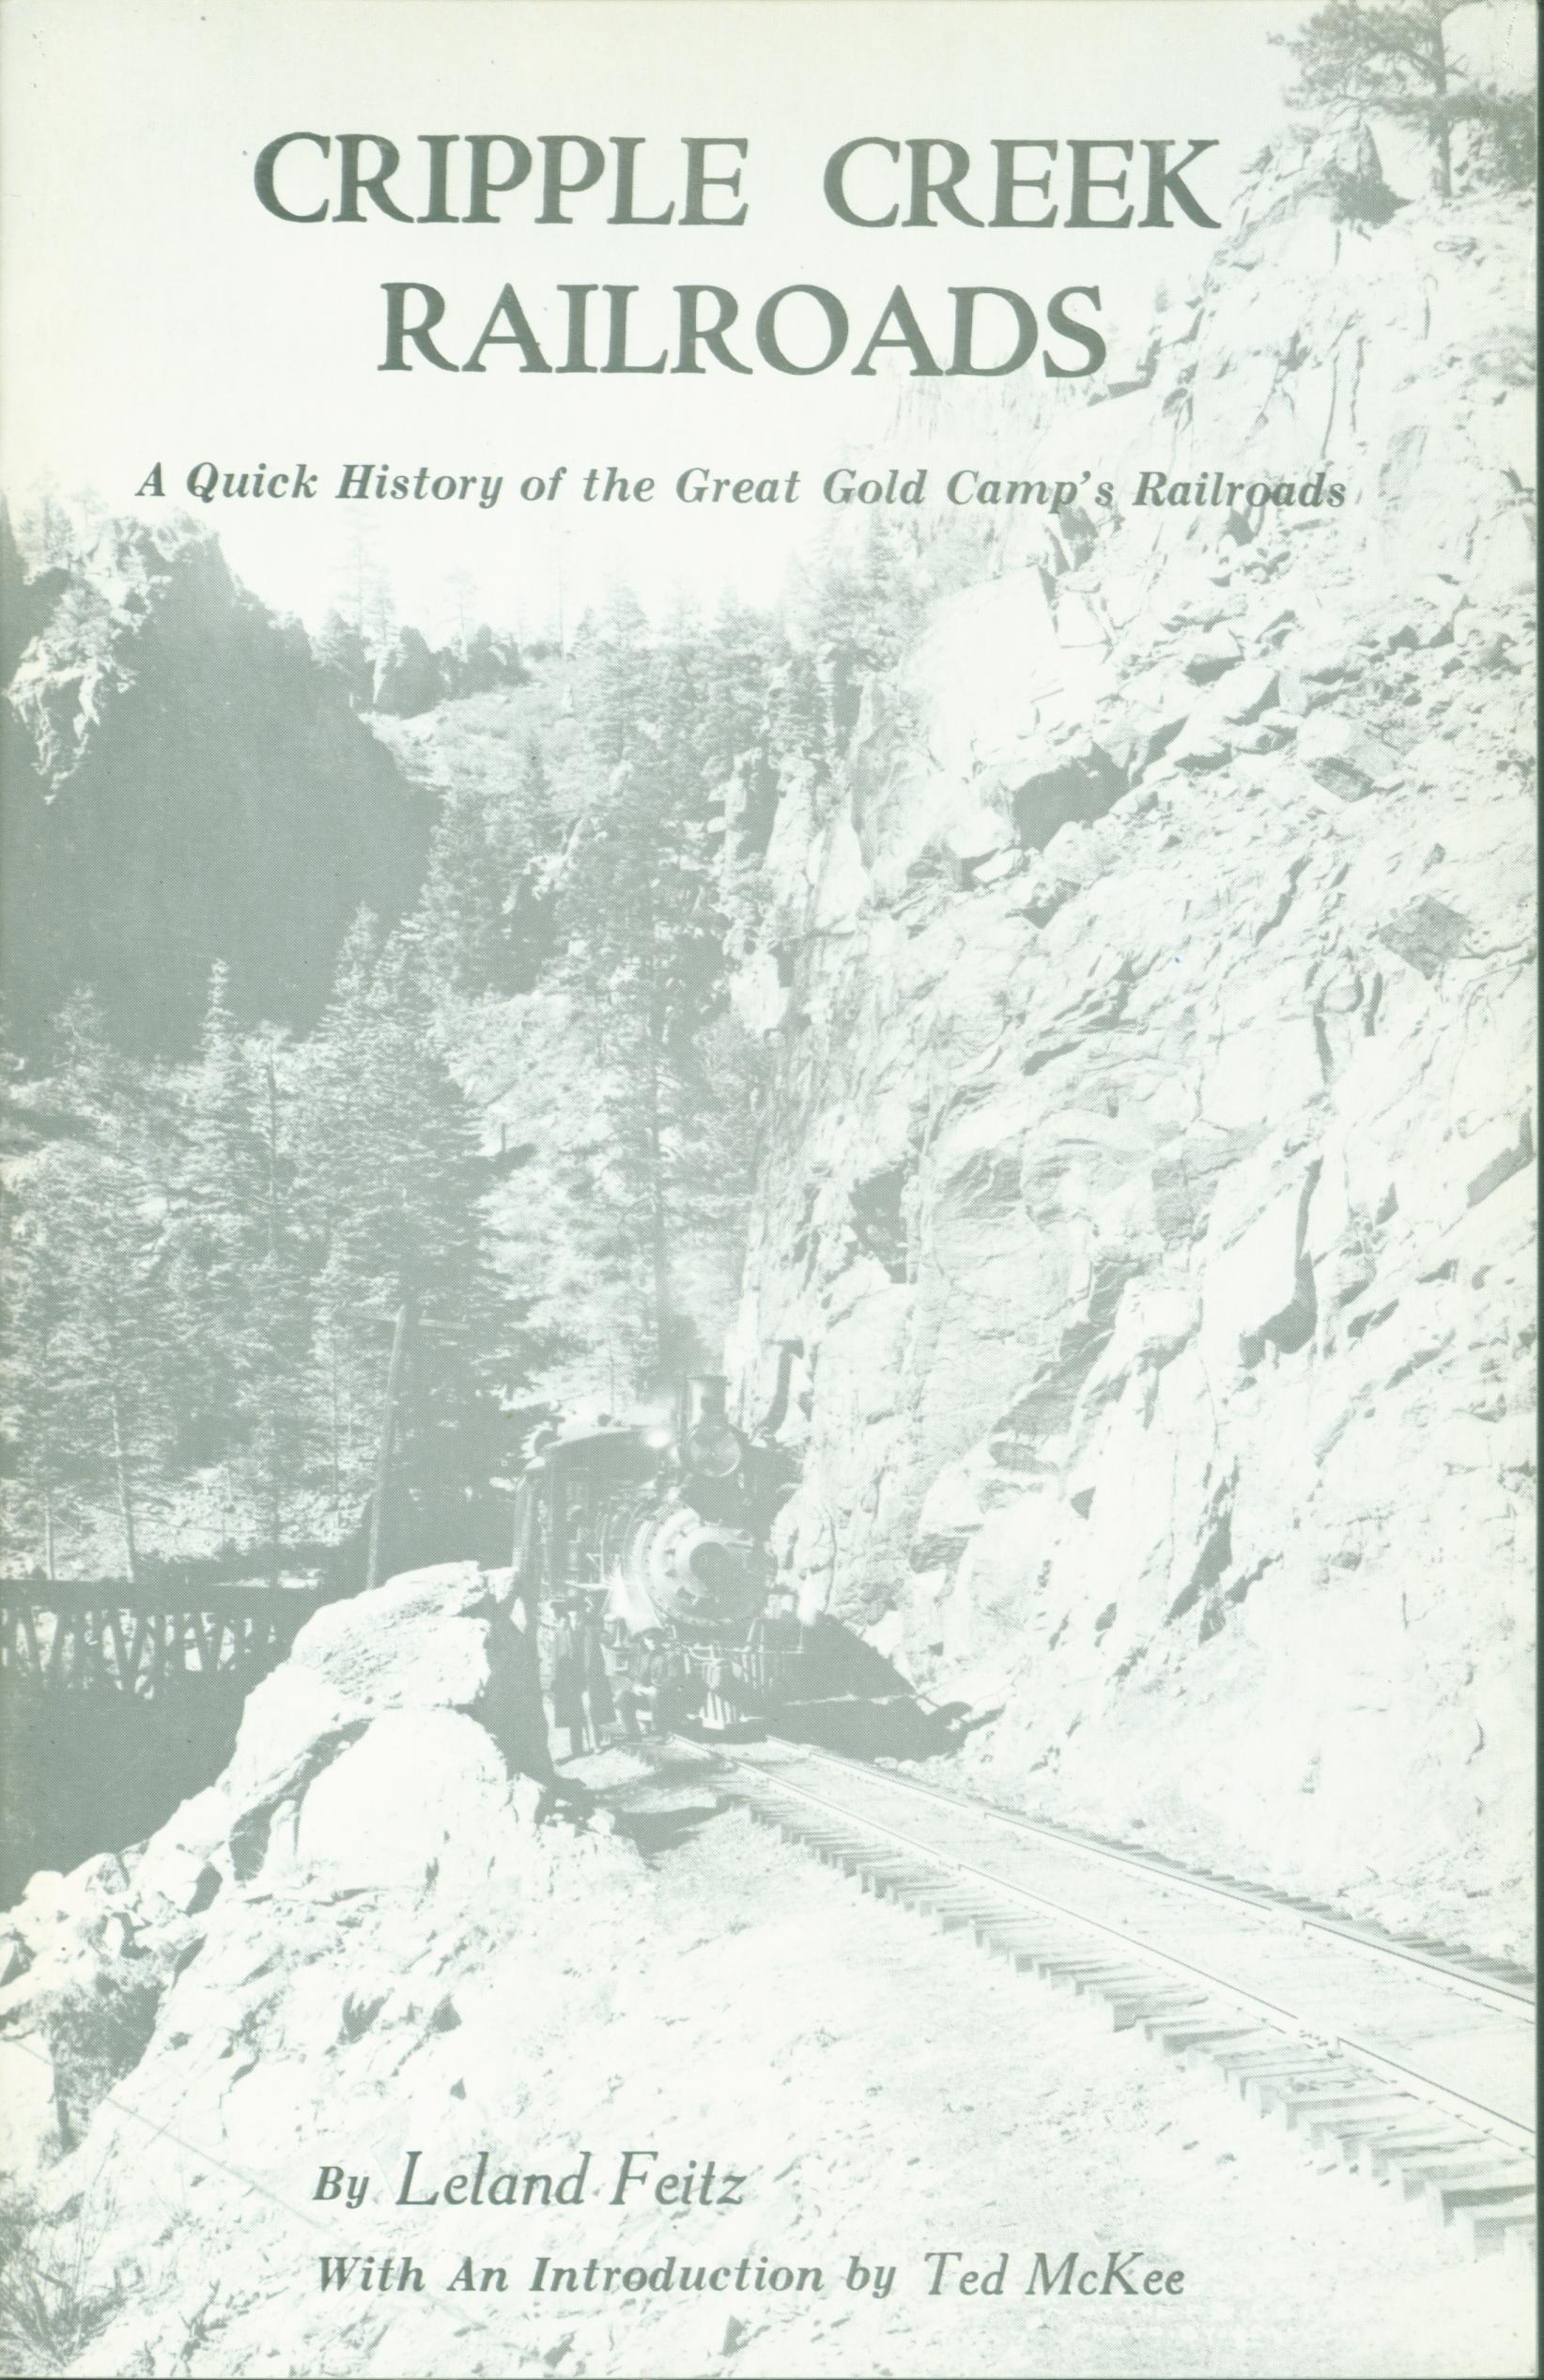 CRIPPLE CREEK RAILROADS: a quick history of the great gold camp's railroads.